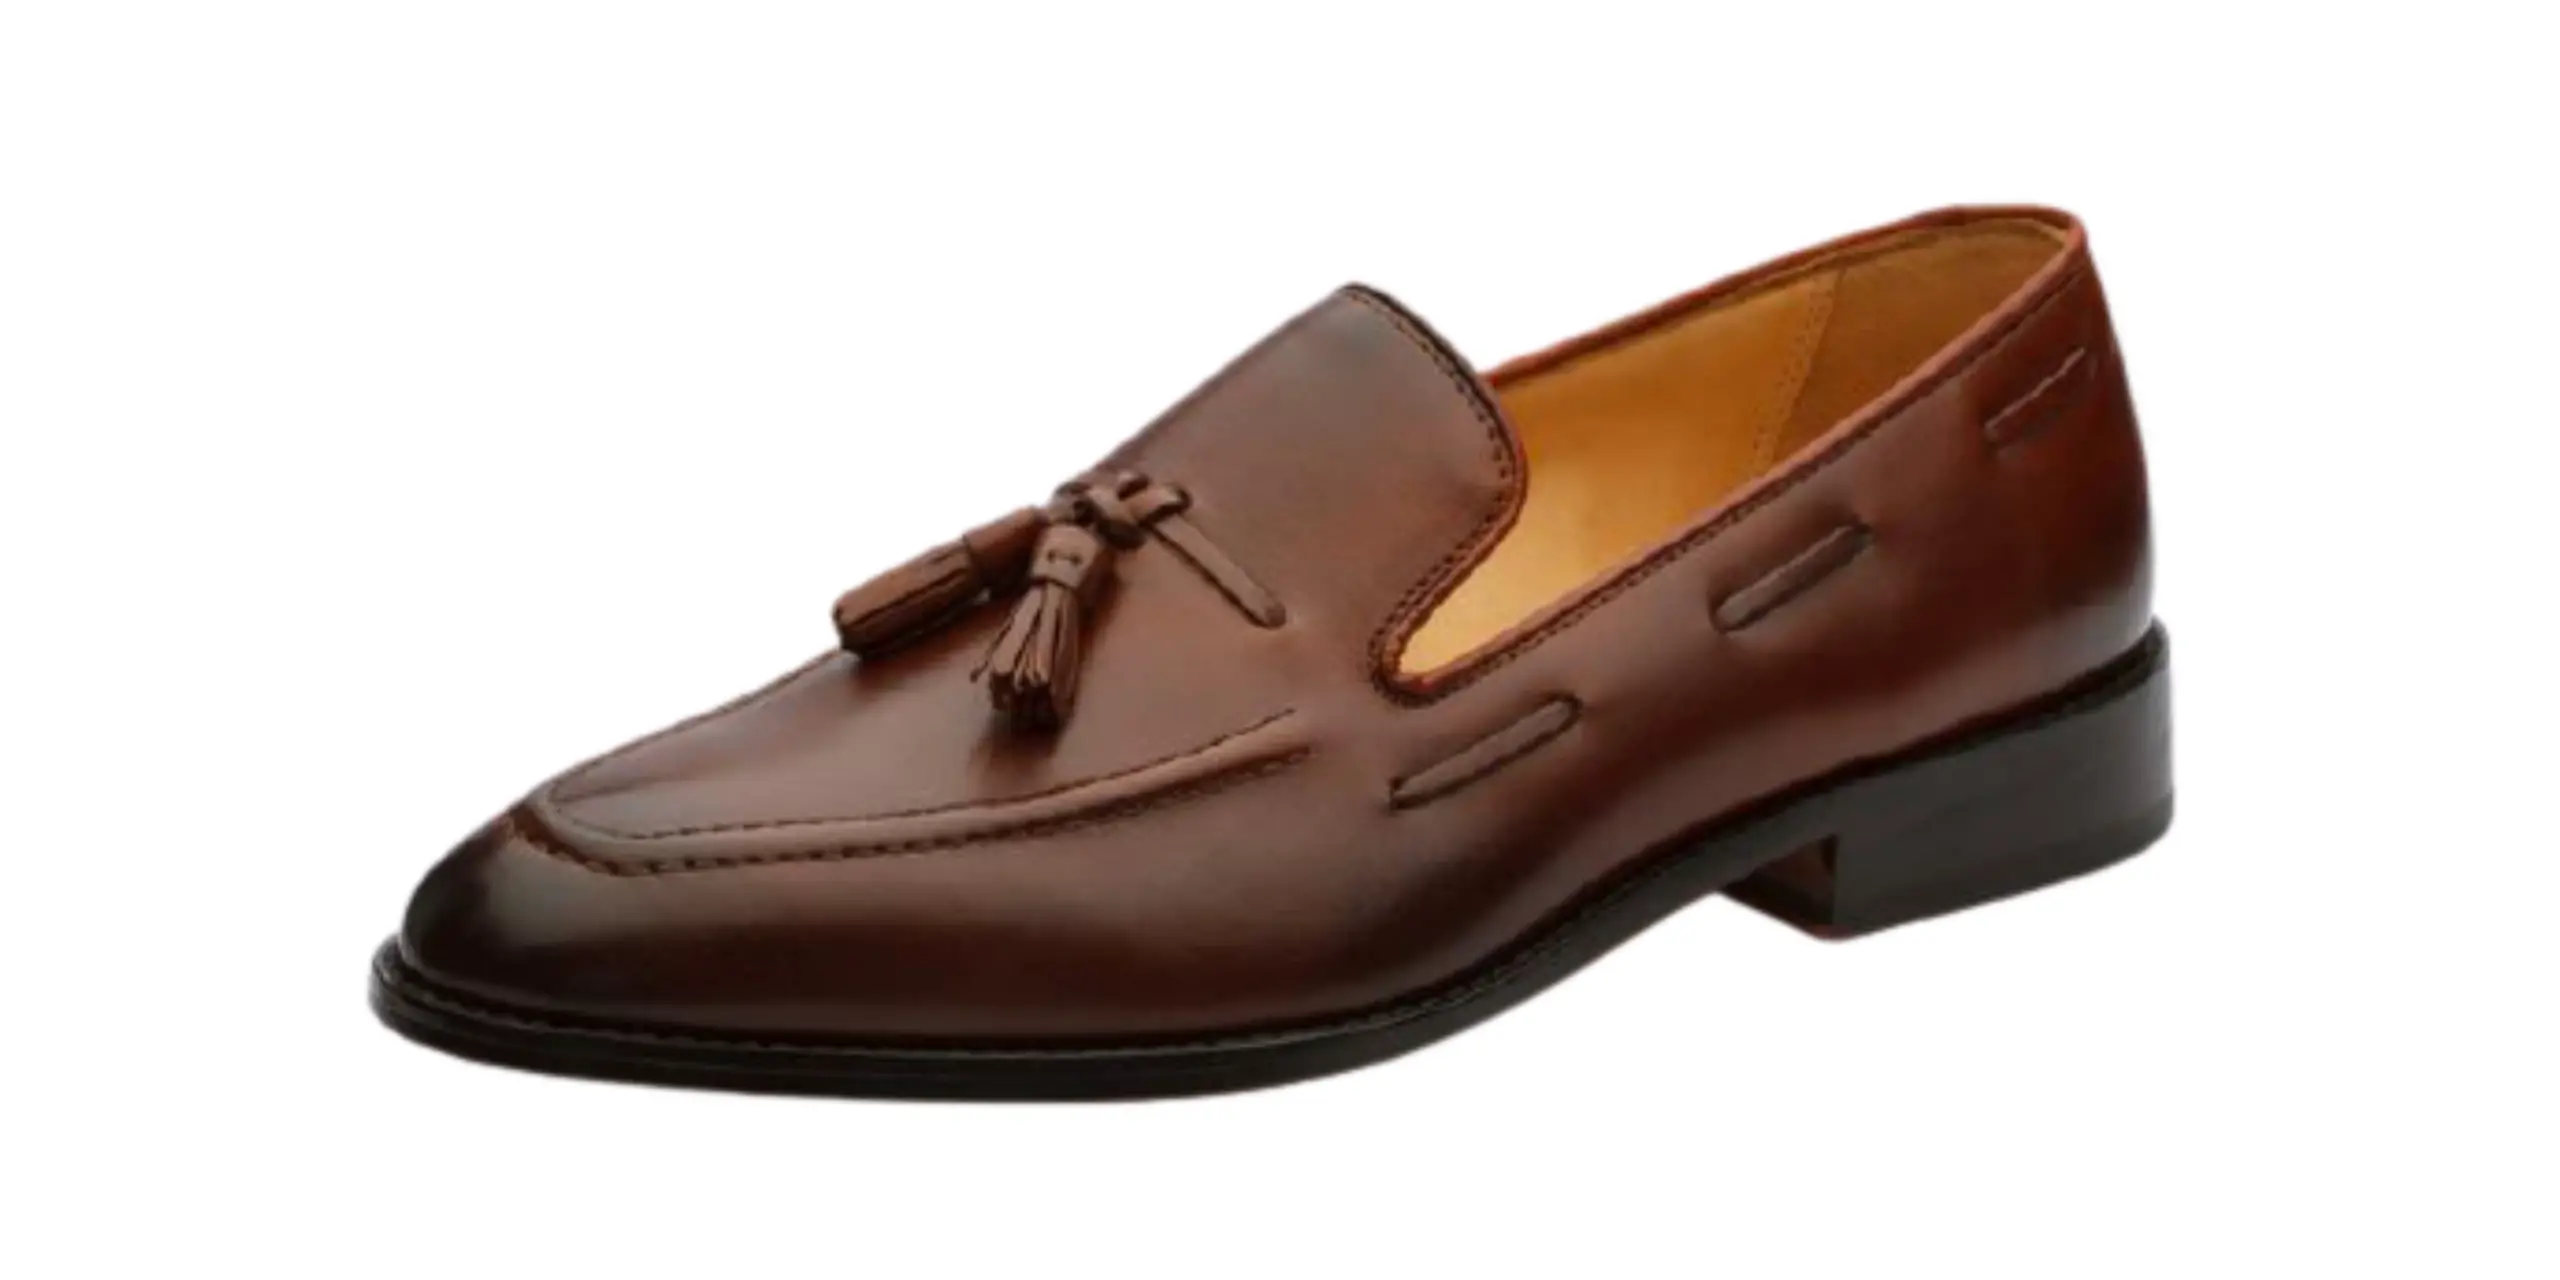 Tassel Shoe — Types of Men's Formal Shoes